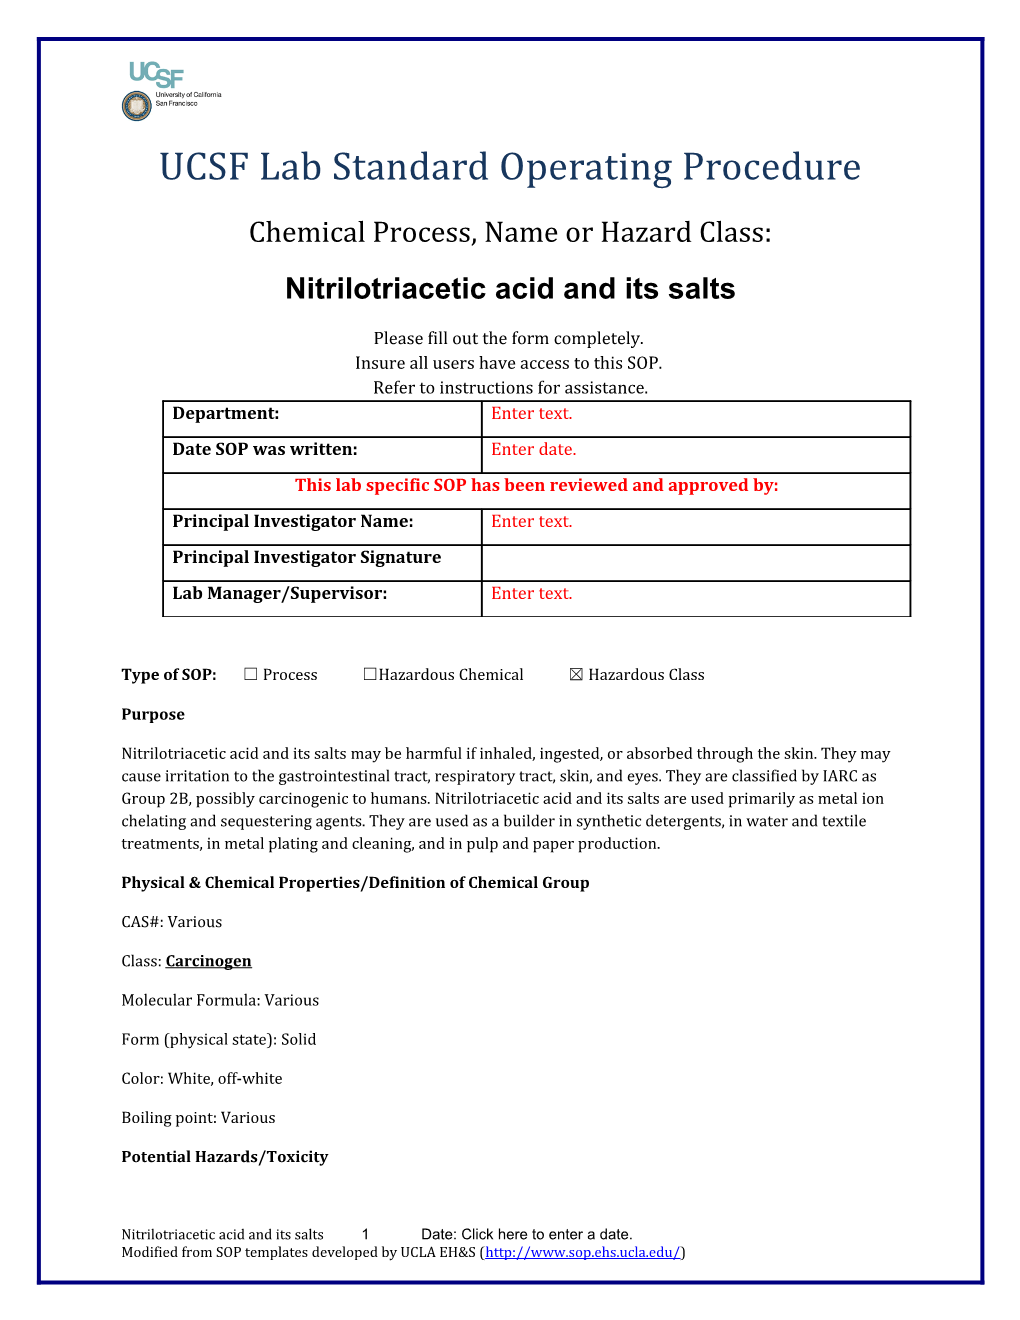 UCSF Lab Standard Operating Procedure s49